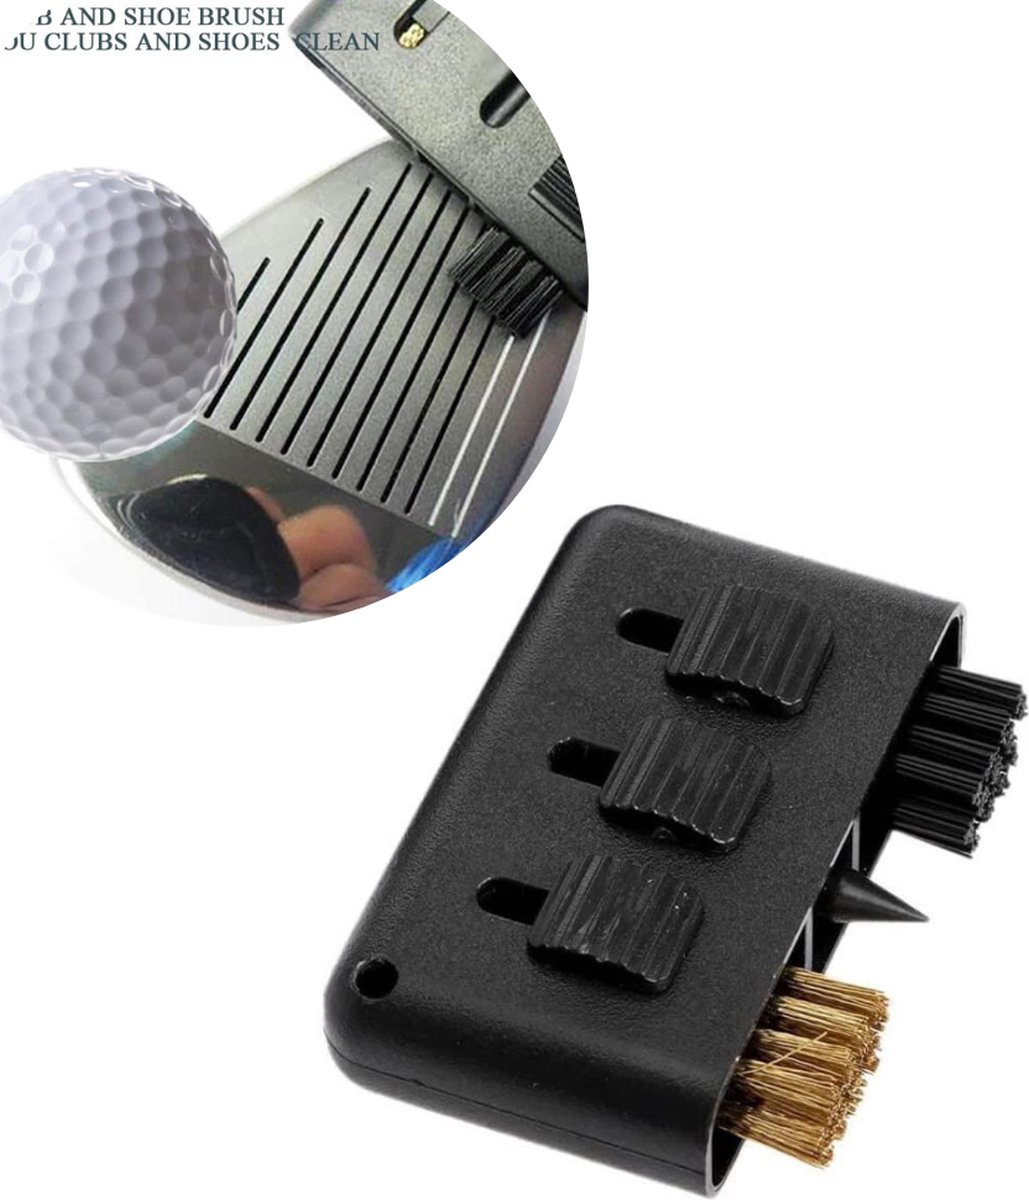 Golf schoonmaakborstel - Golfclub borstel - 3 in 1 compact - Golfbalcleaner - Golf schoonmaakborstel - Golfaccesoires - Golftrainingsmaterialen - trolleyaccesoires - Golfset - Merkloos